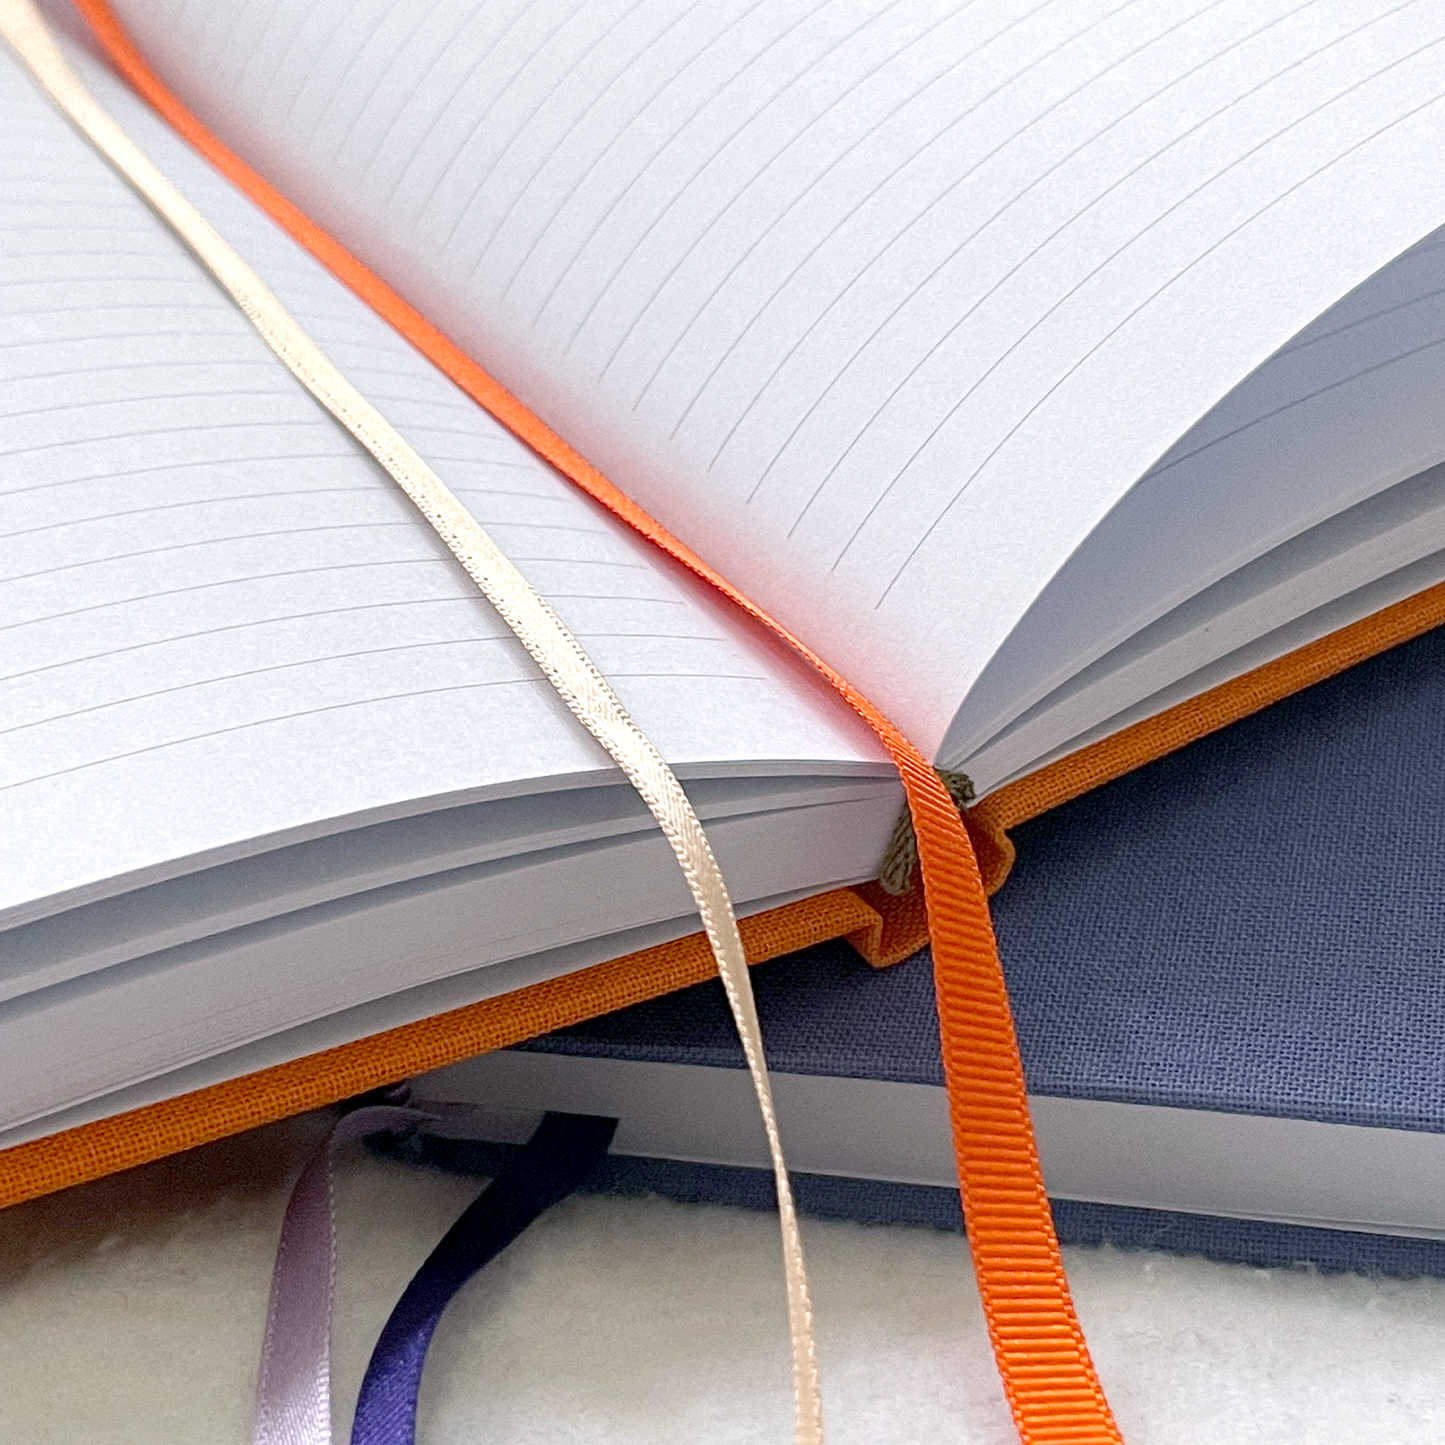 Clifton Notebook – Orange Blaze